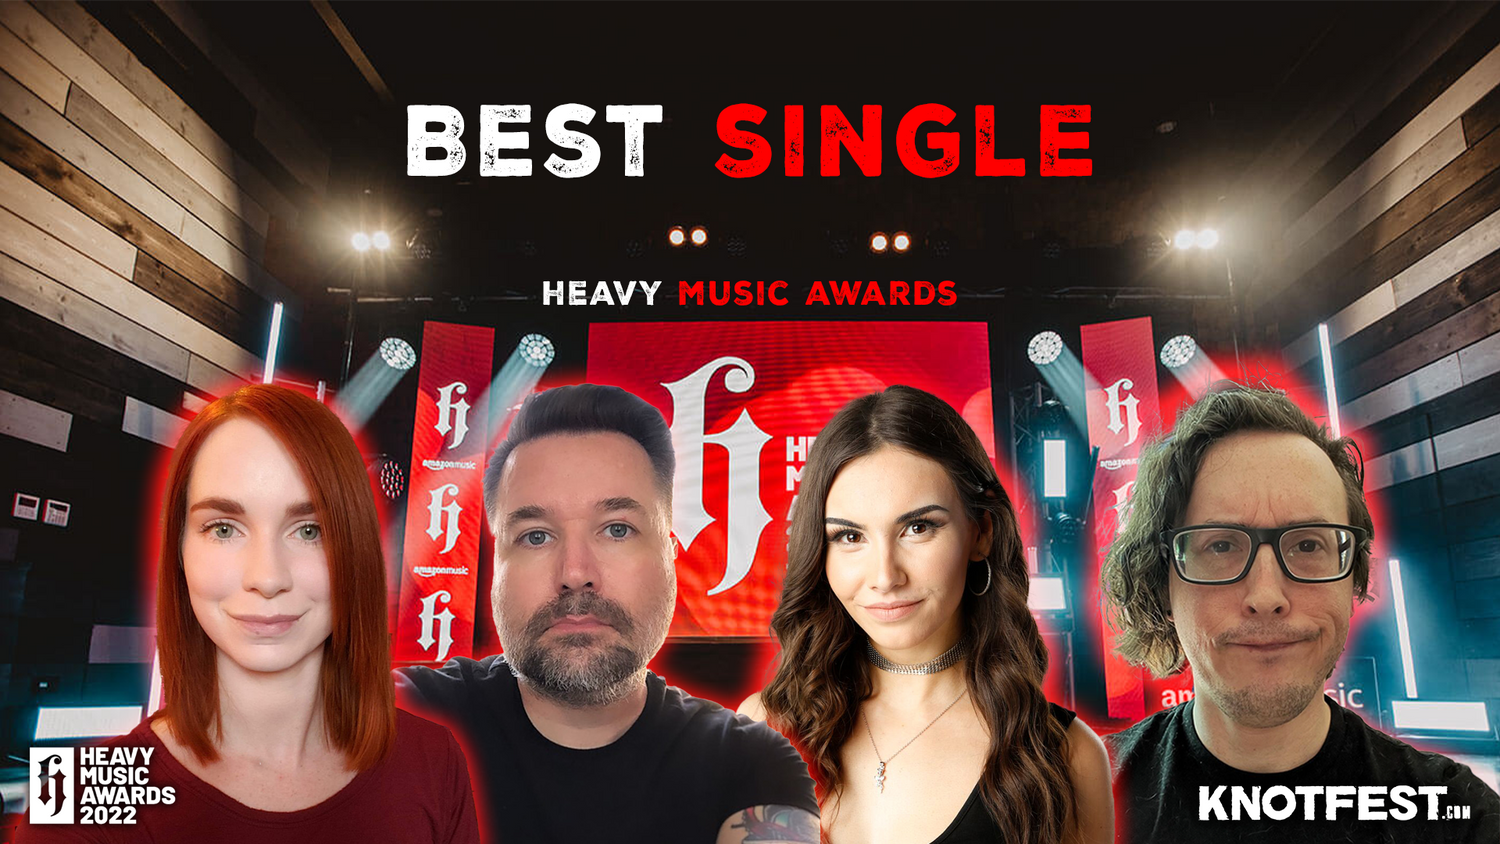 Heavy Music Awards Roundtable - Best Single